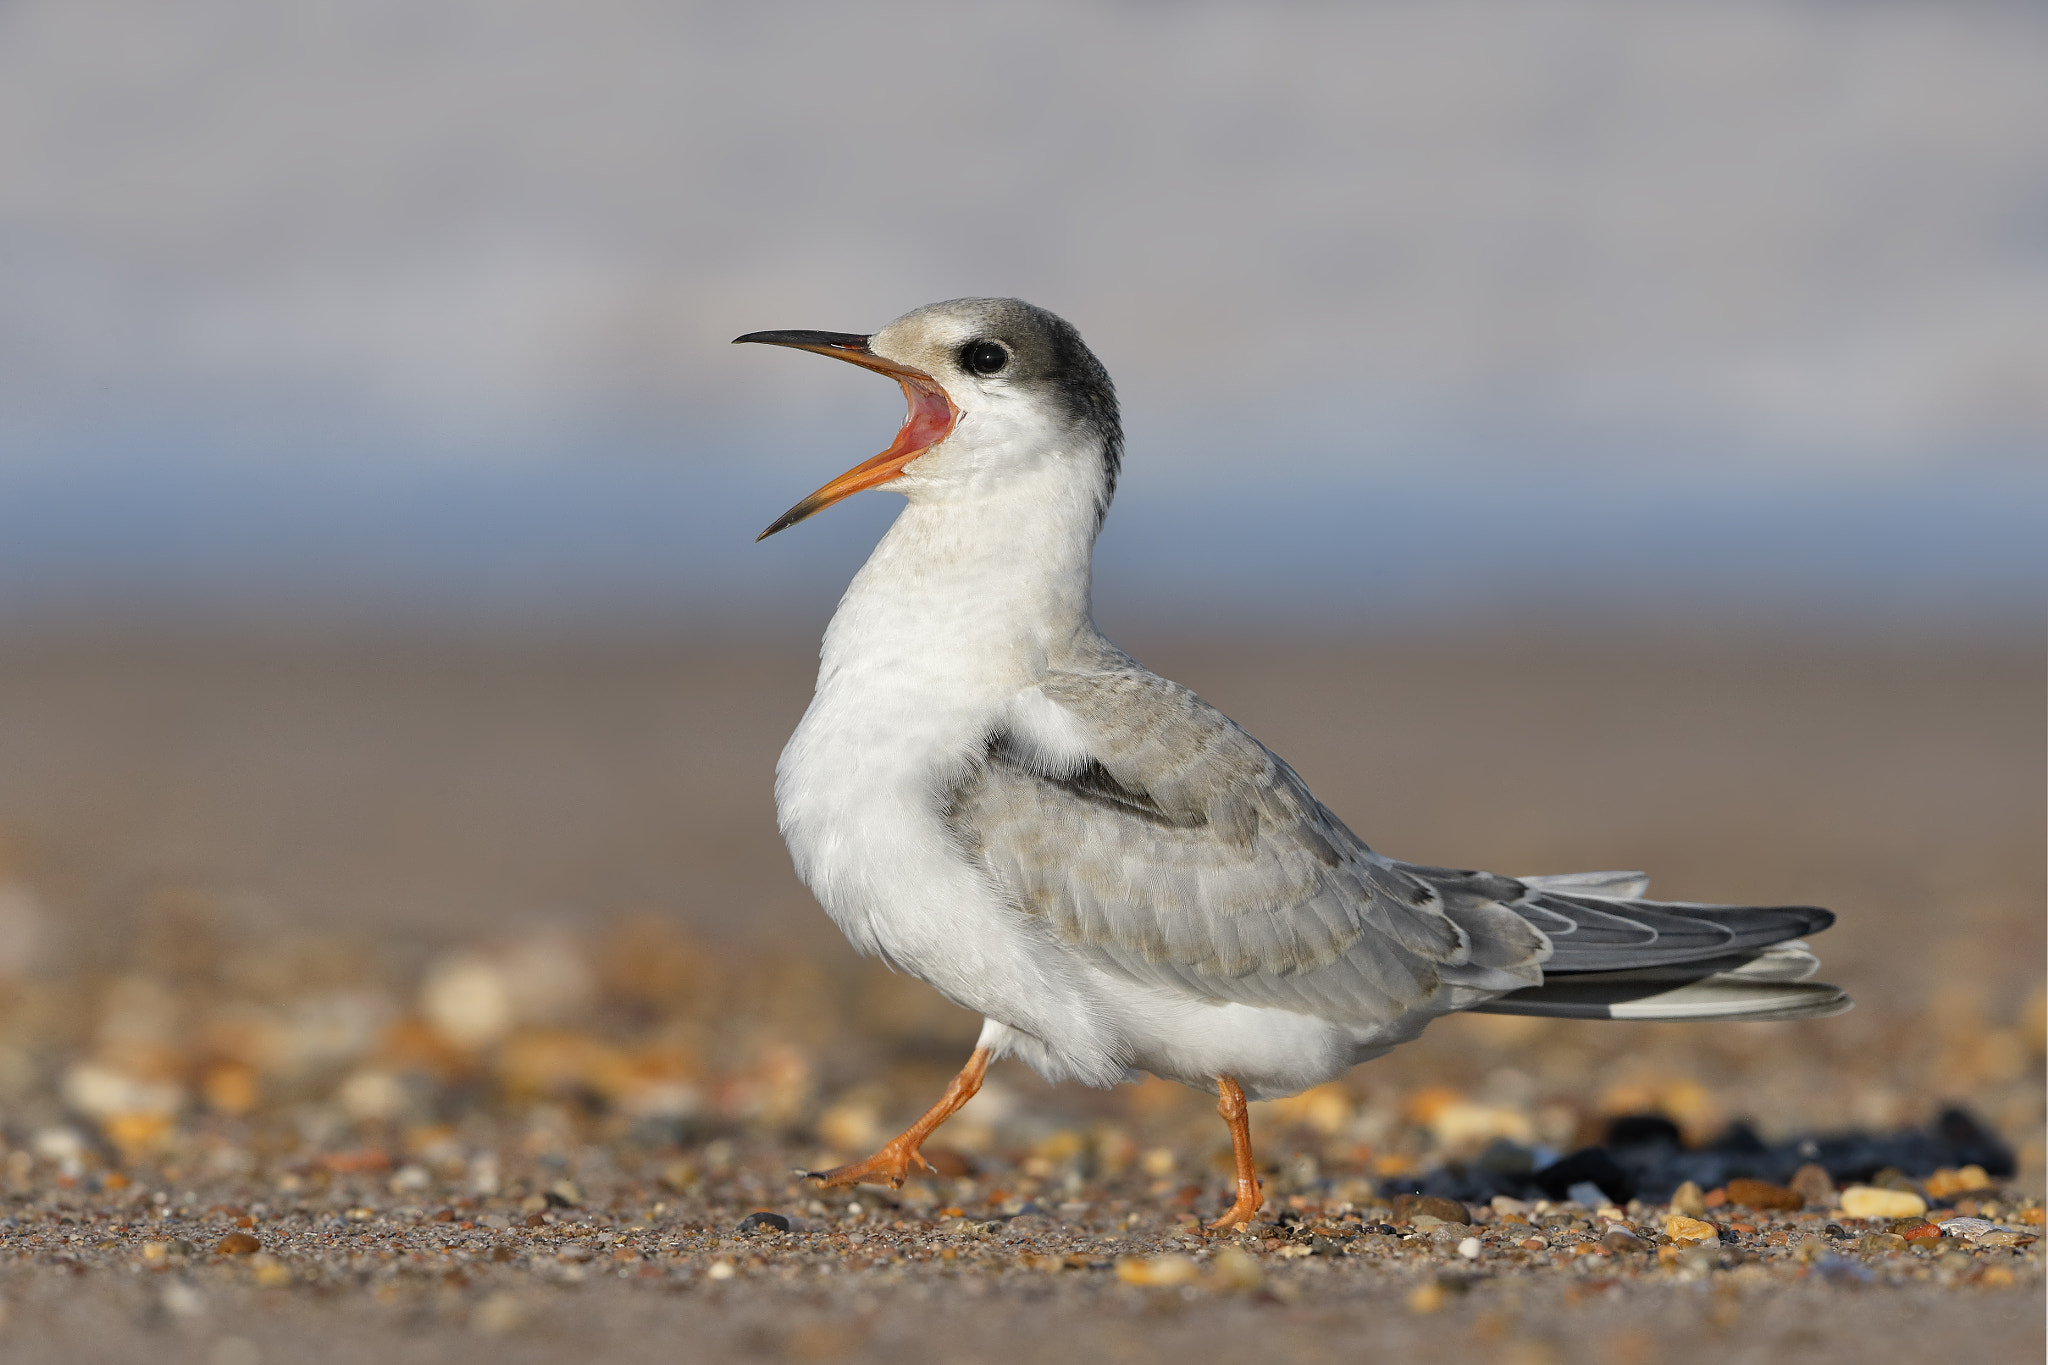 Common Tern begging